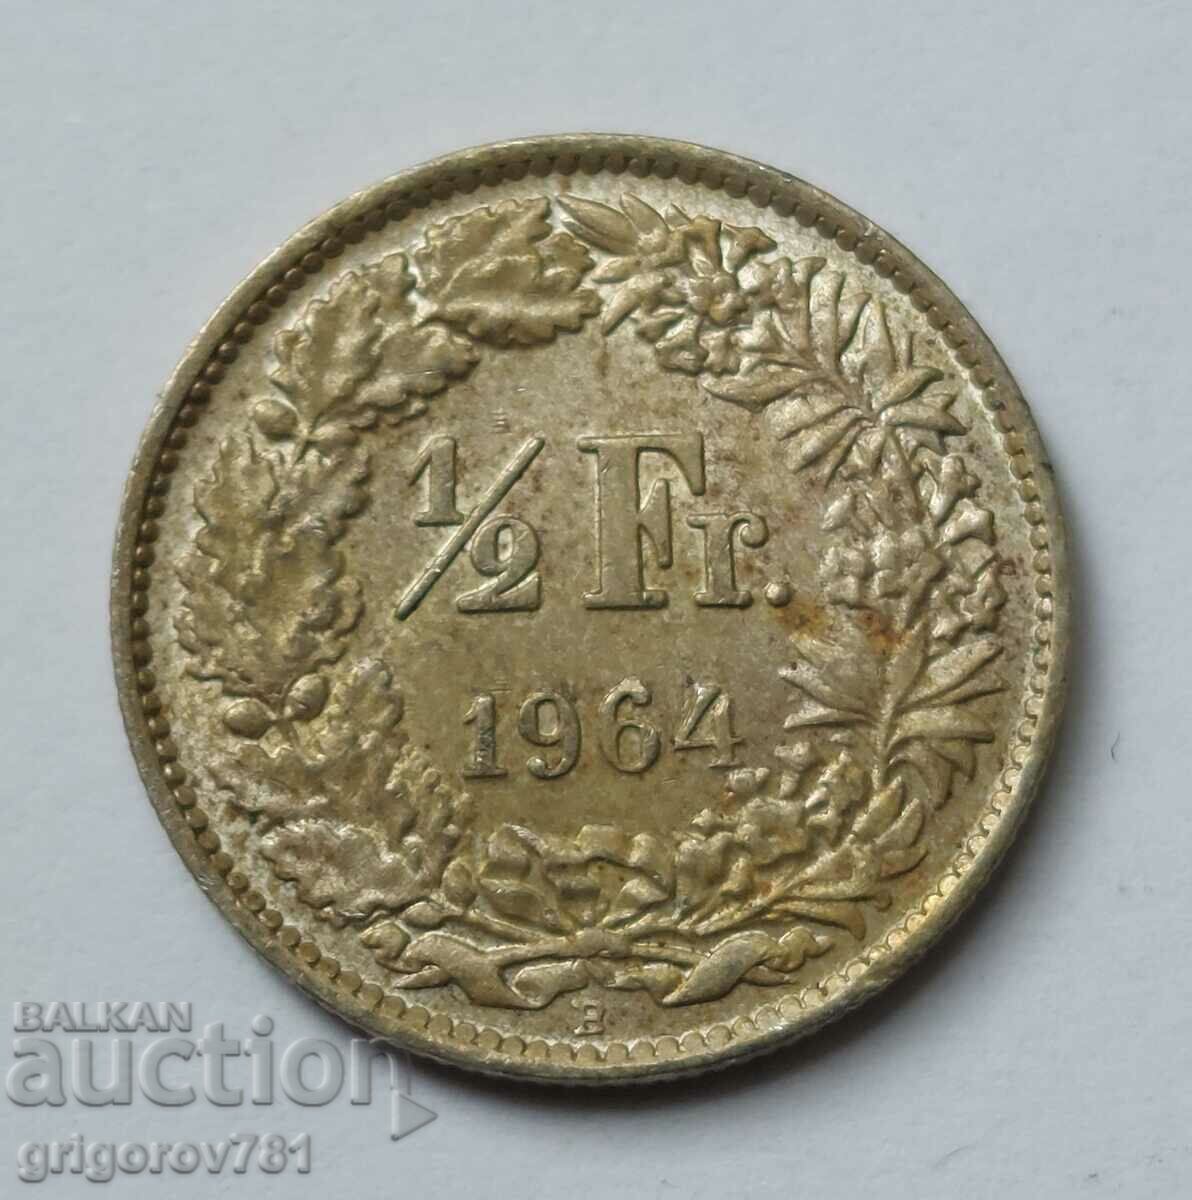 1/2 Franc Silver Switzerland 1964 B - Silver Coin #58